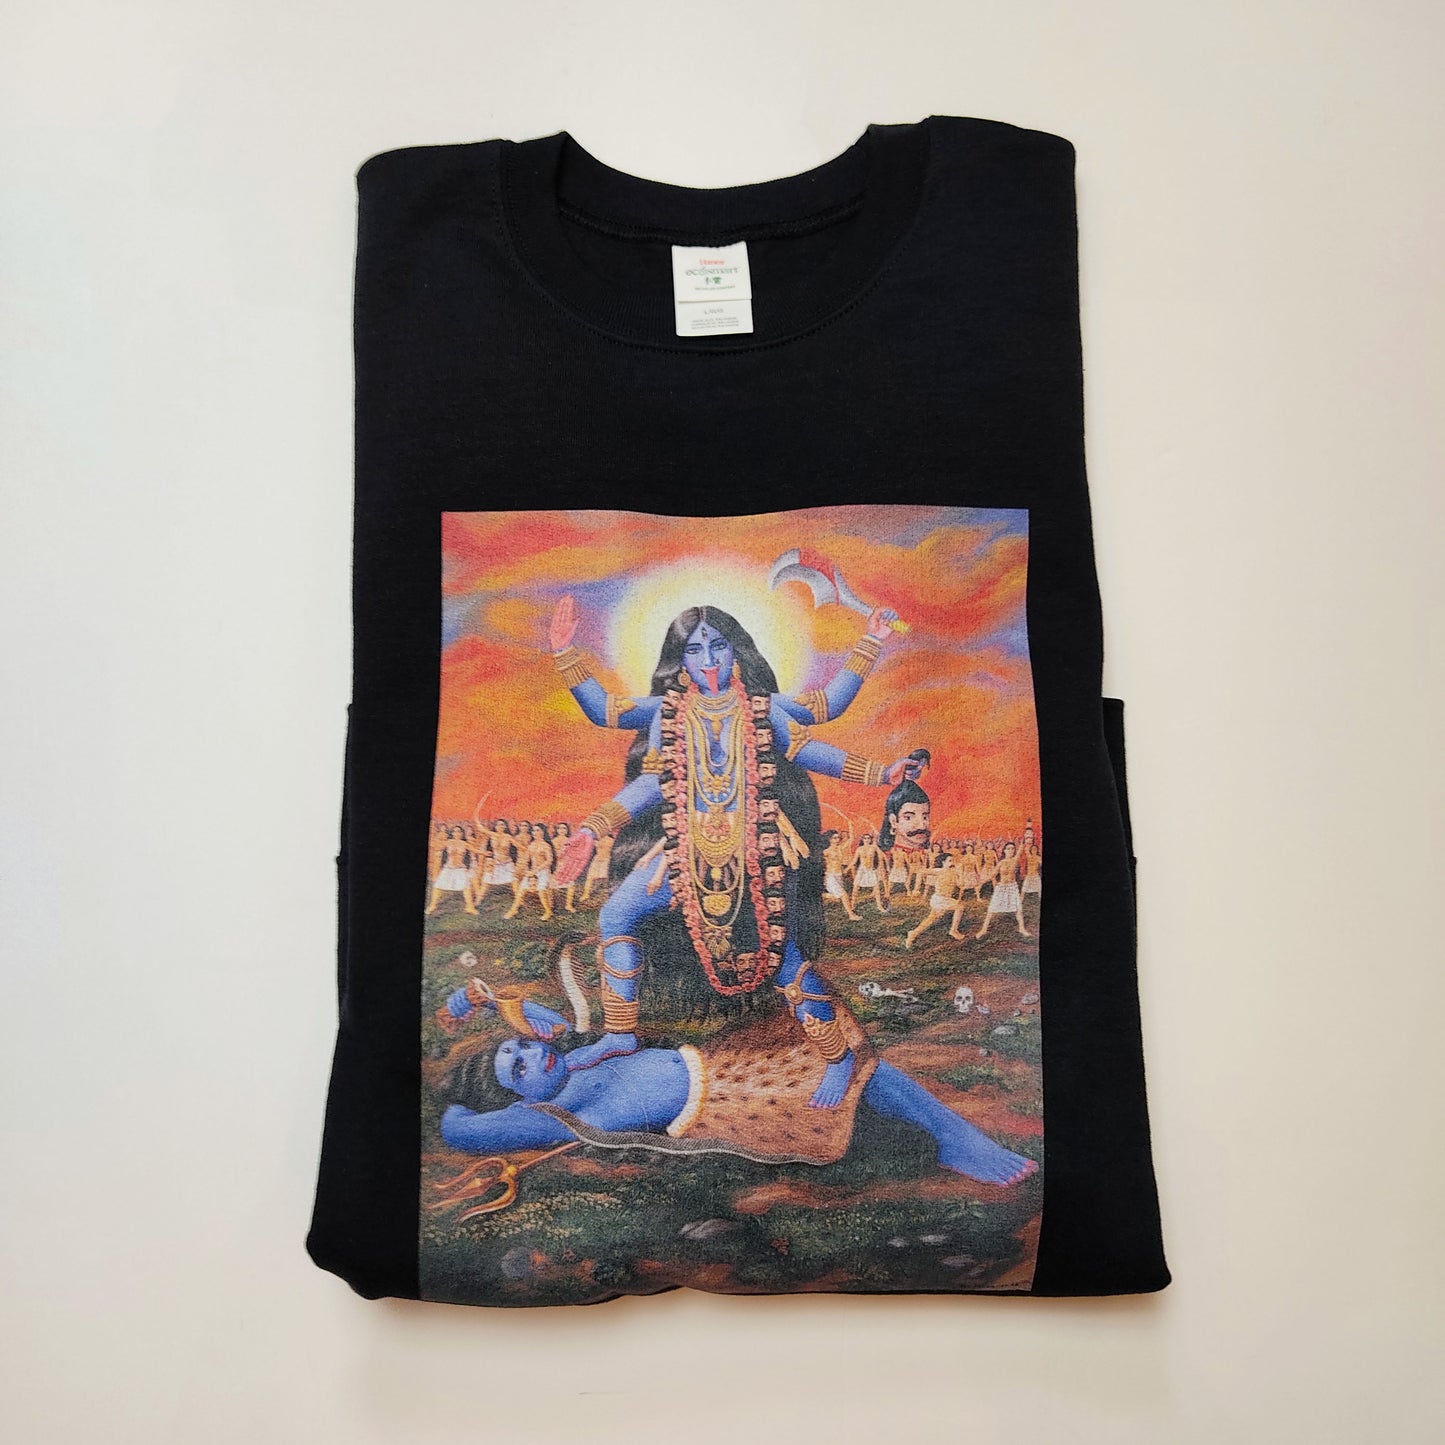 Goddess Kali Shiva Black Sweatshirt - Original Painting - Hindu Gods - Size Large